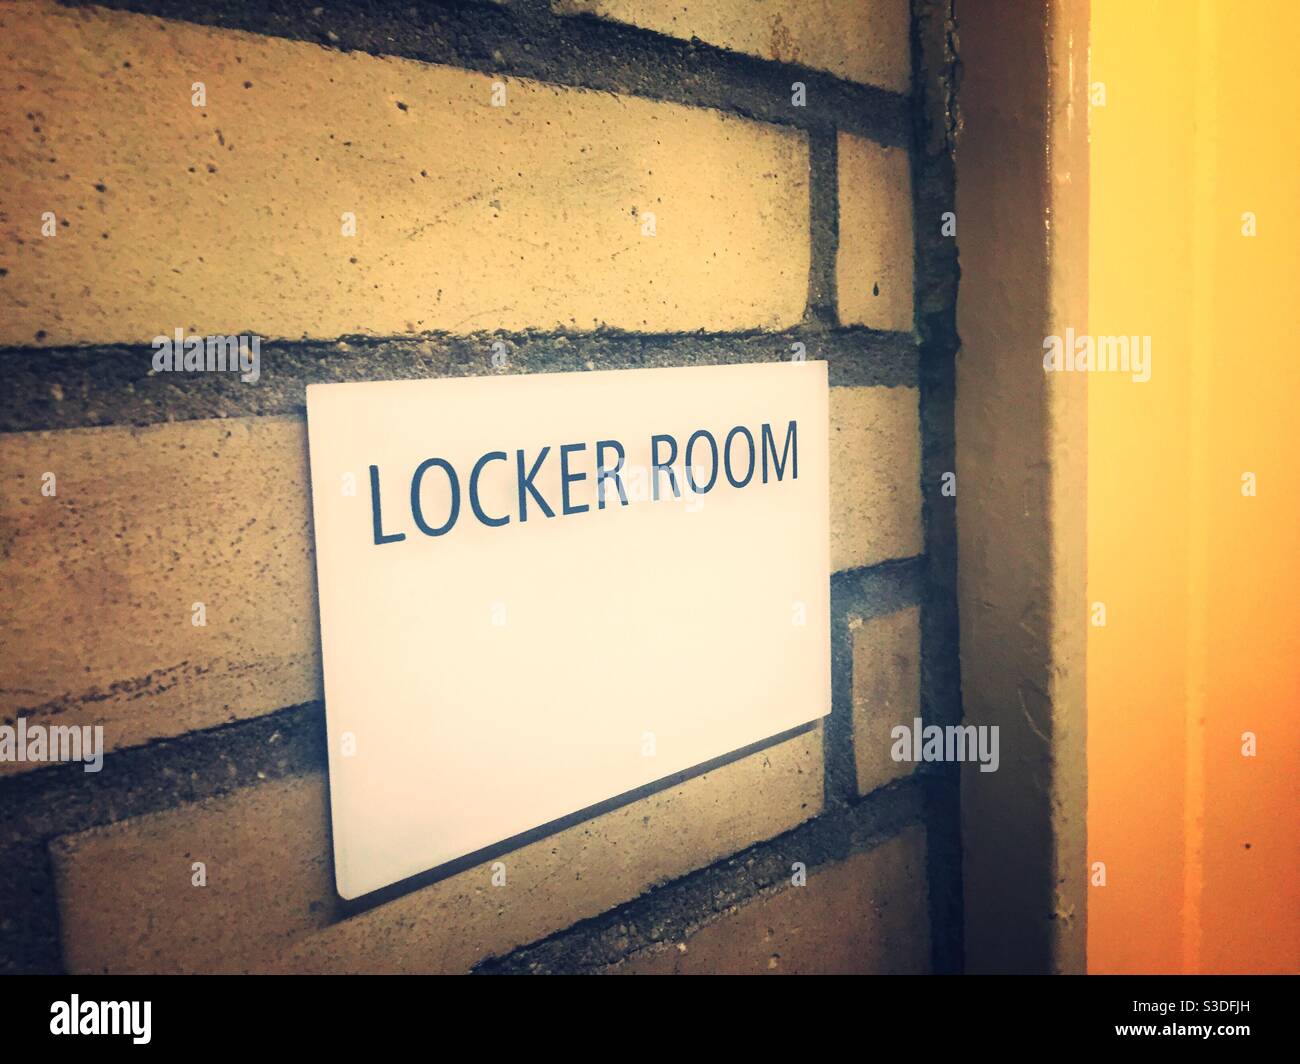 Locker room sign in a public school, USA Stock Photo